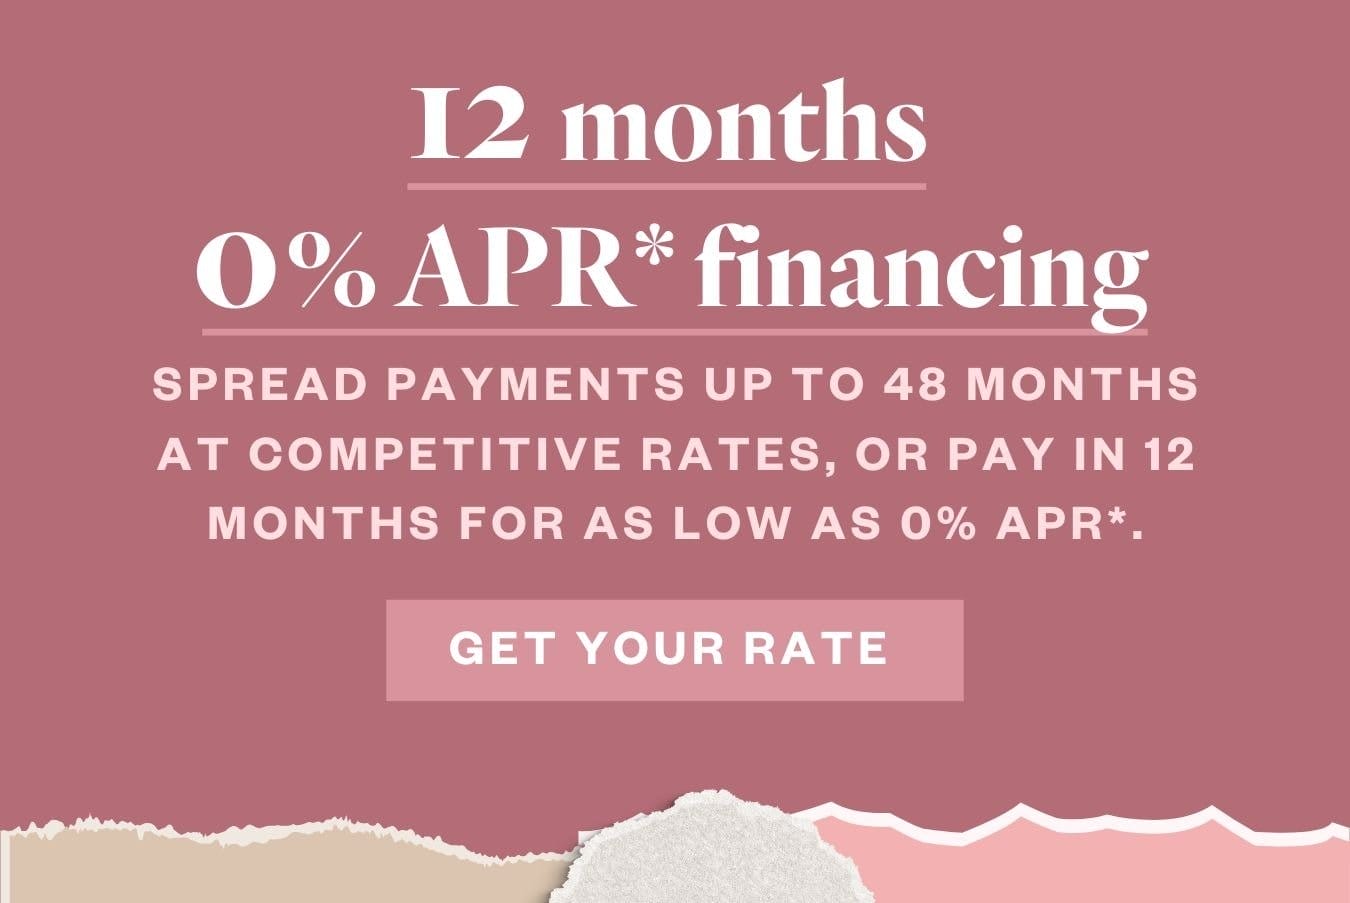 12 months 0% APR* financing